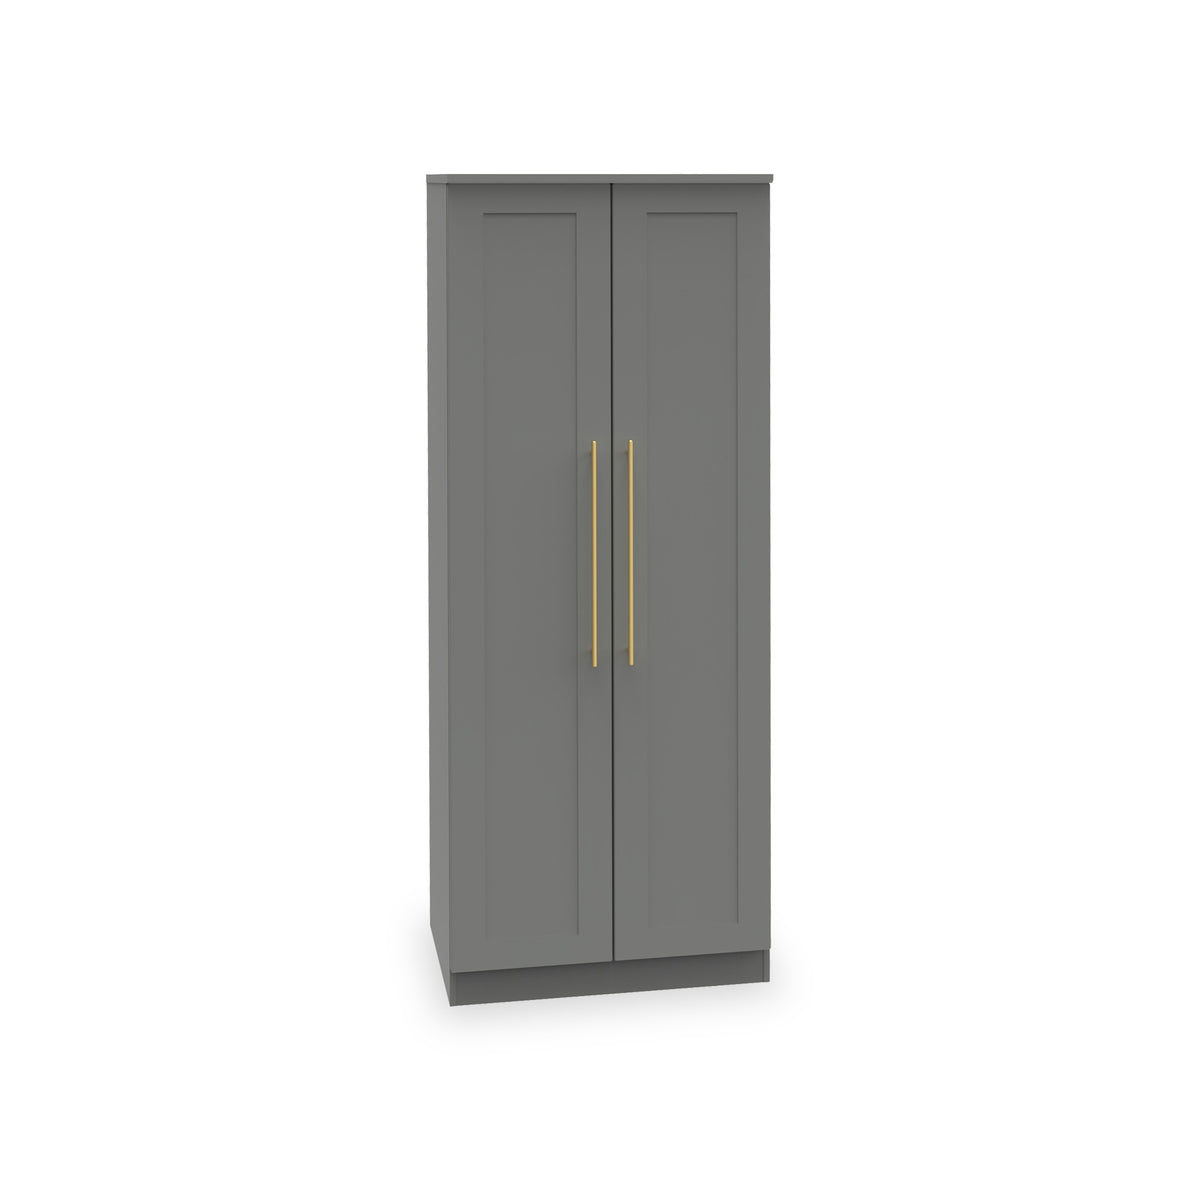 Bramham Grey 2 Door Wardrobe from Roseland Furniture